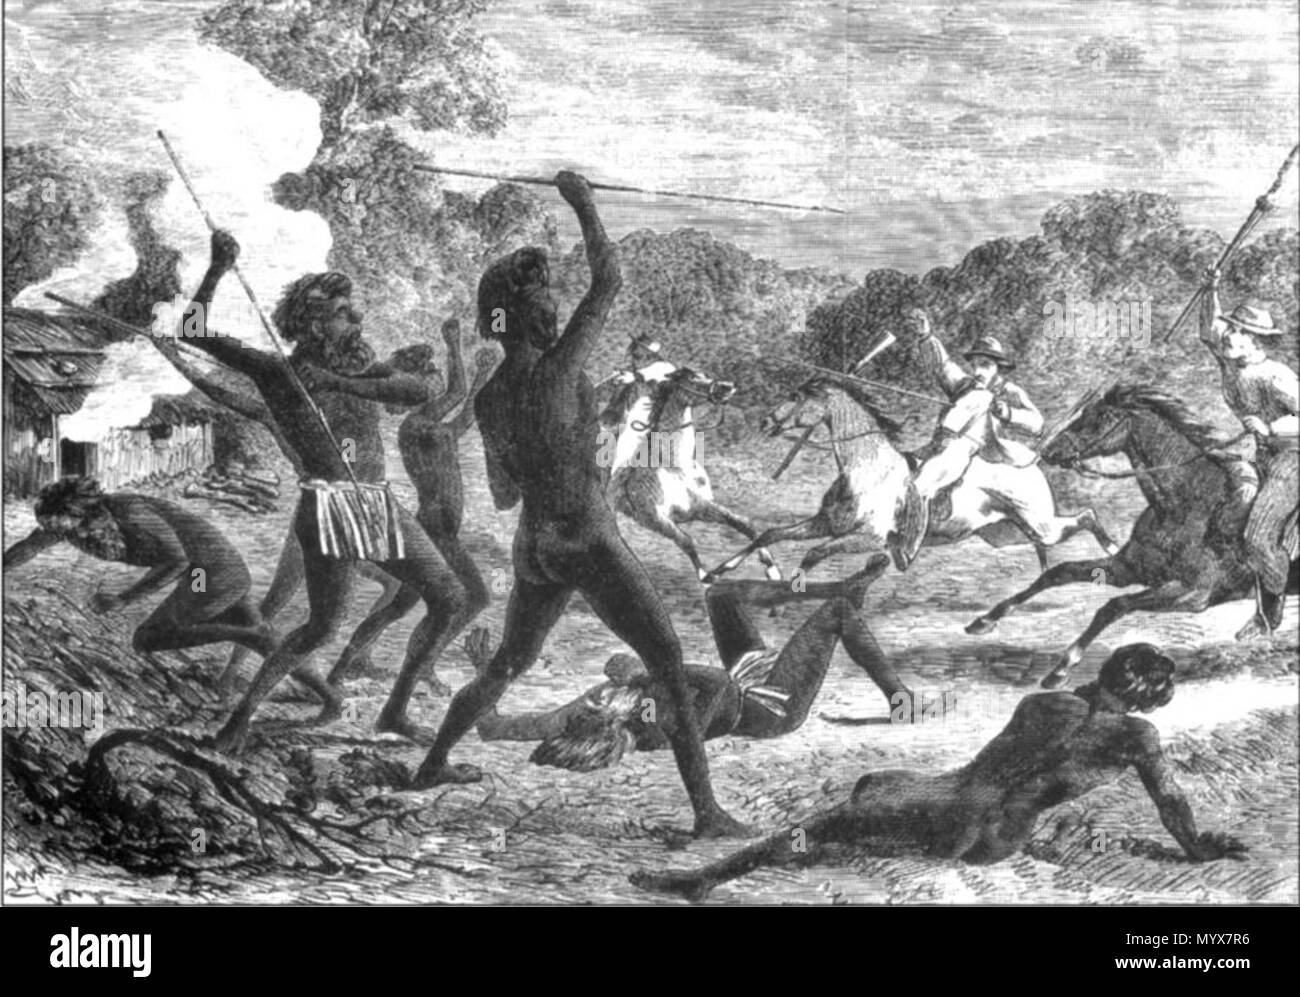 Aboriginals fighting against the europeans invading their natural homes 1 Aboriginals fighting against the europeans invading their natural homes Stock Photo - Alamy